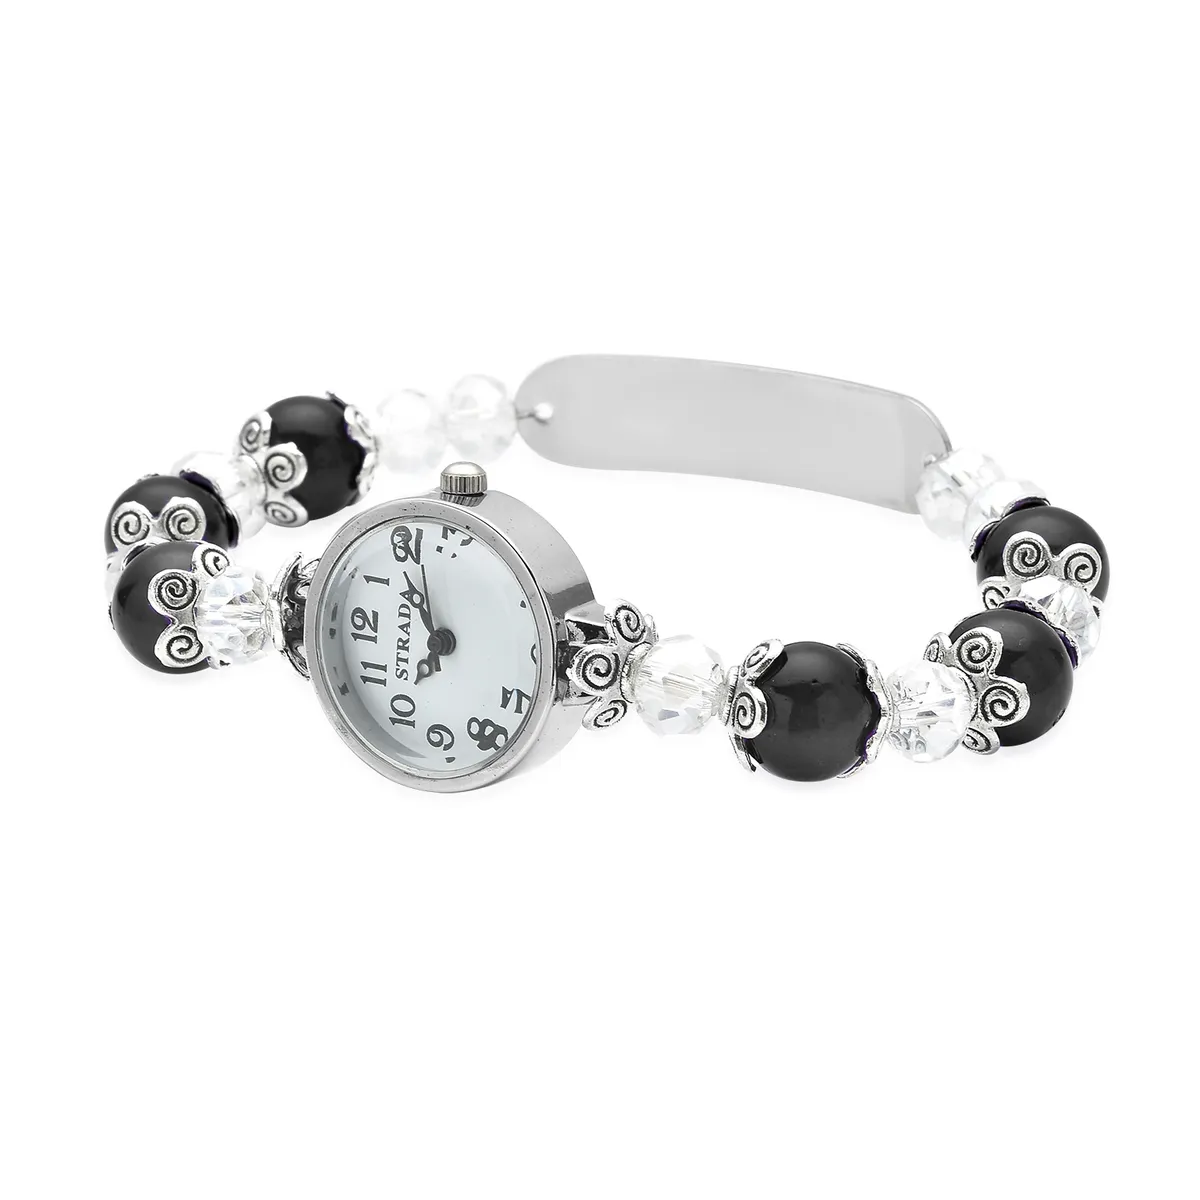 Beaded Bracelet Watch with Medical Alert